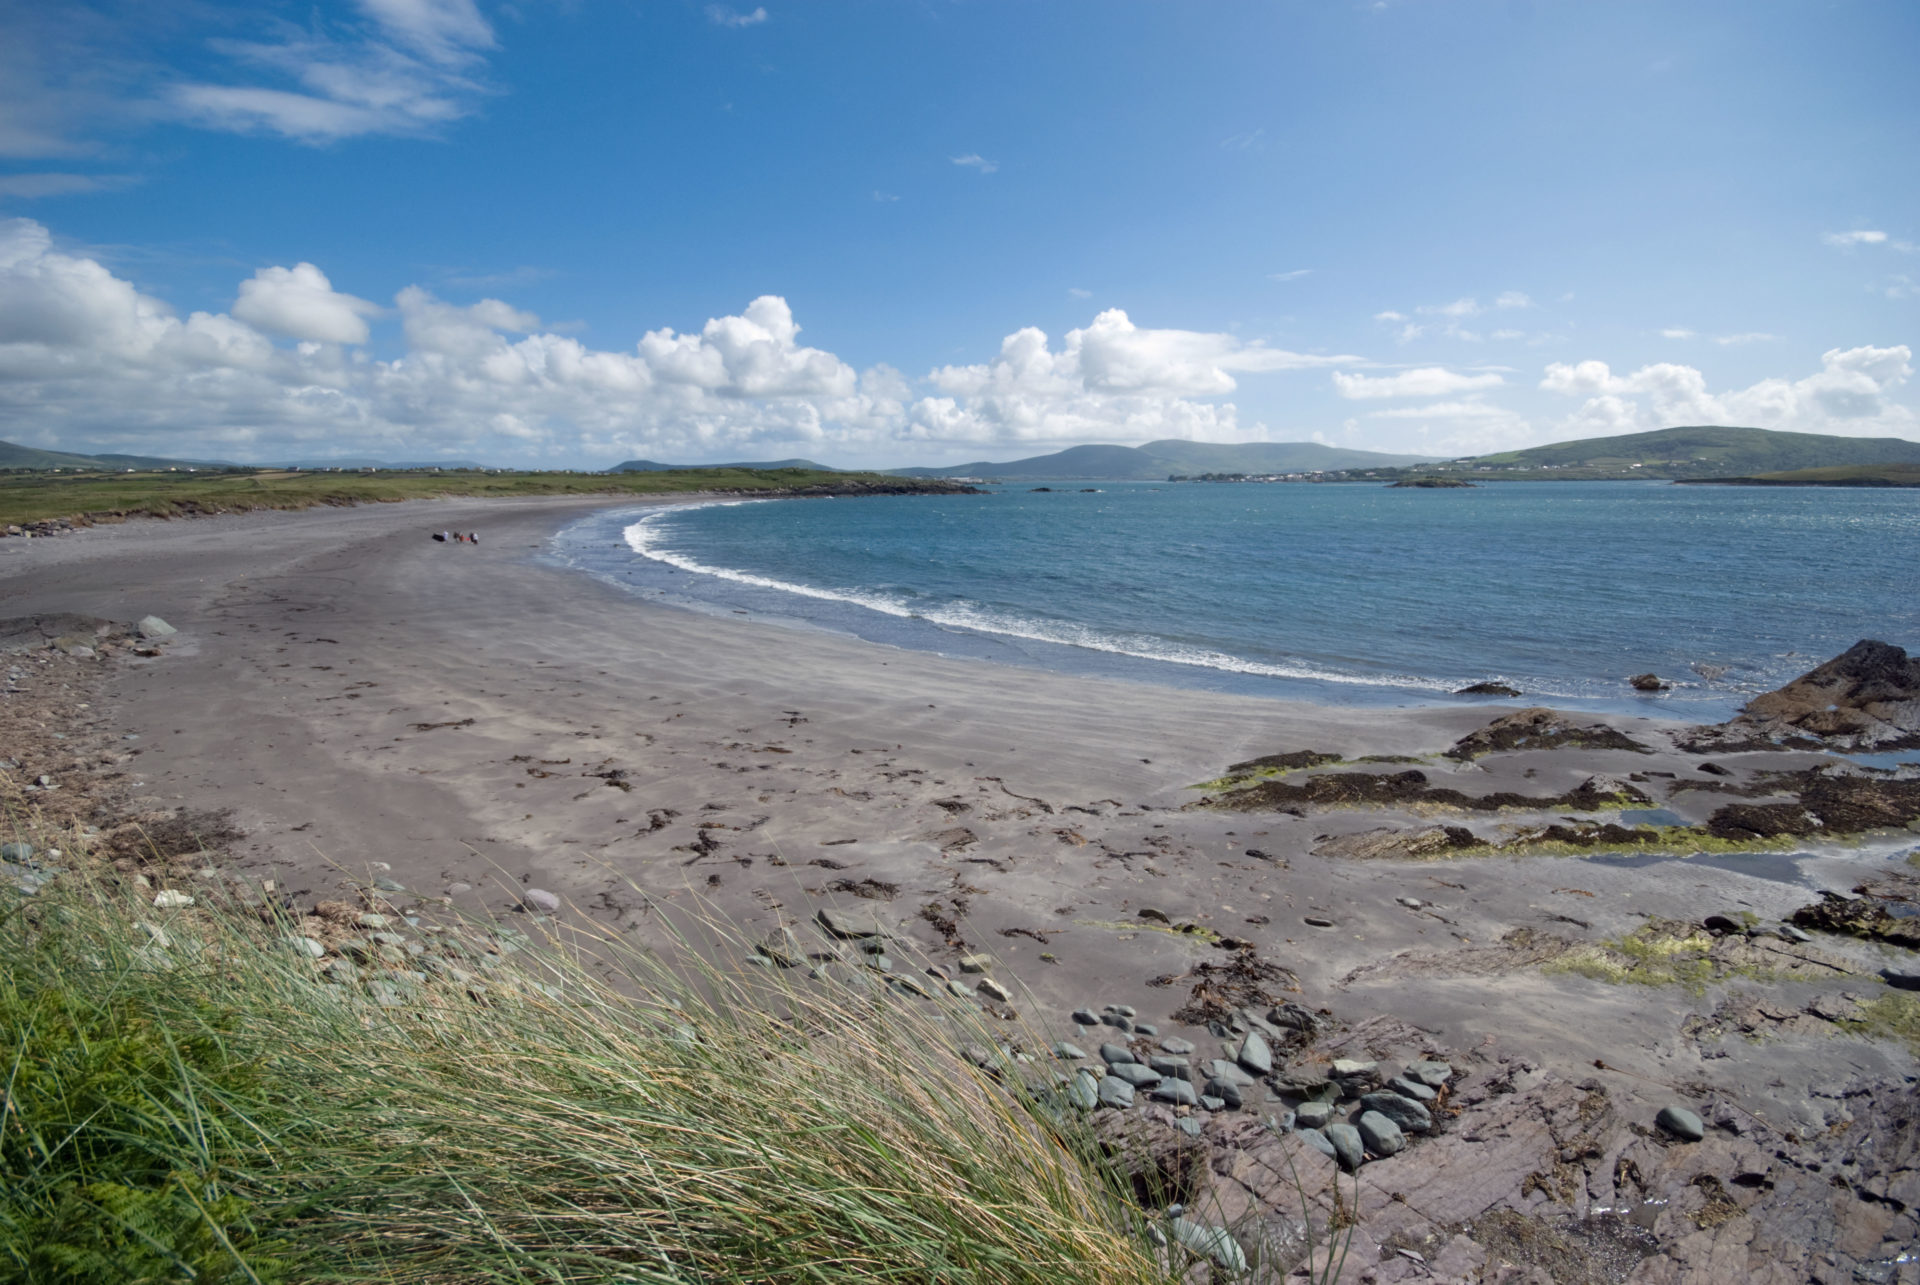 Main image shows White Strand beach in Cahirsiveen, Co Kerry.